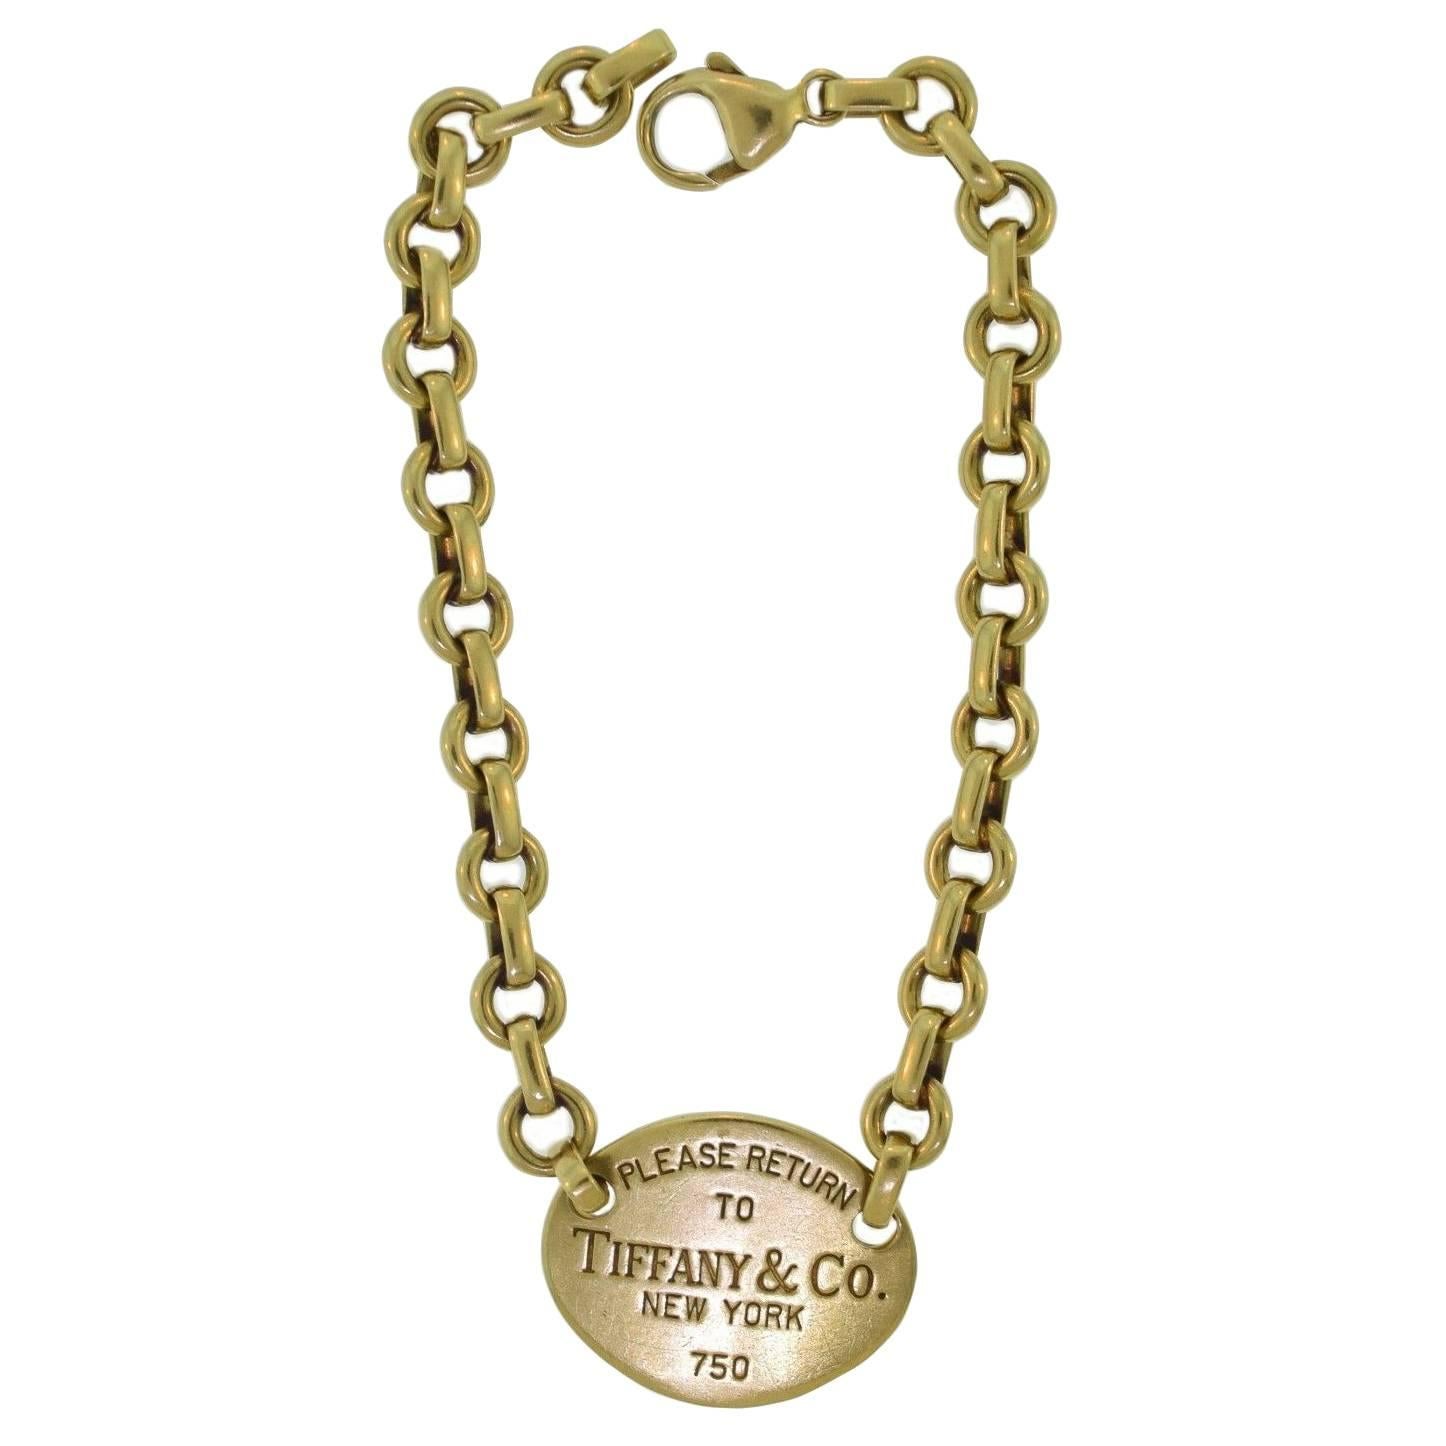 1980s Tiffany & Co. Gold “Return to Tiffany” Oval Tag Bracelet 